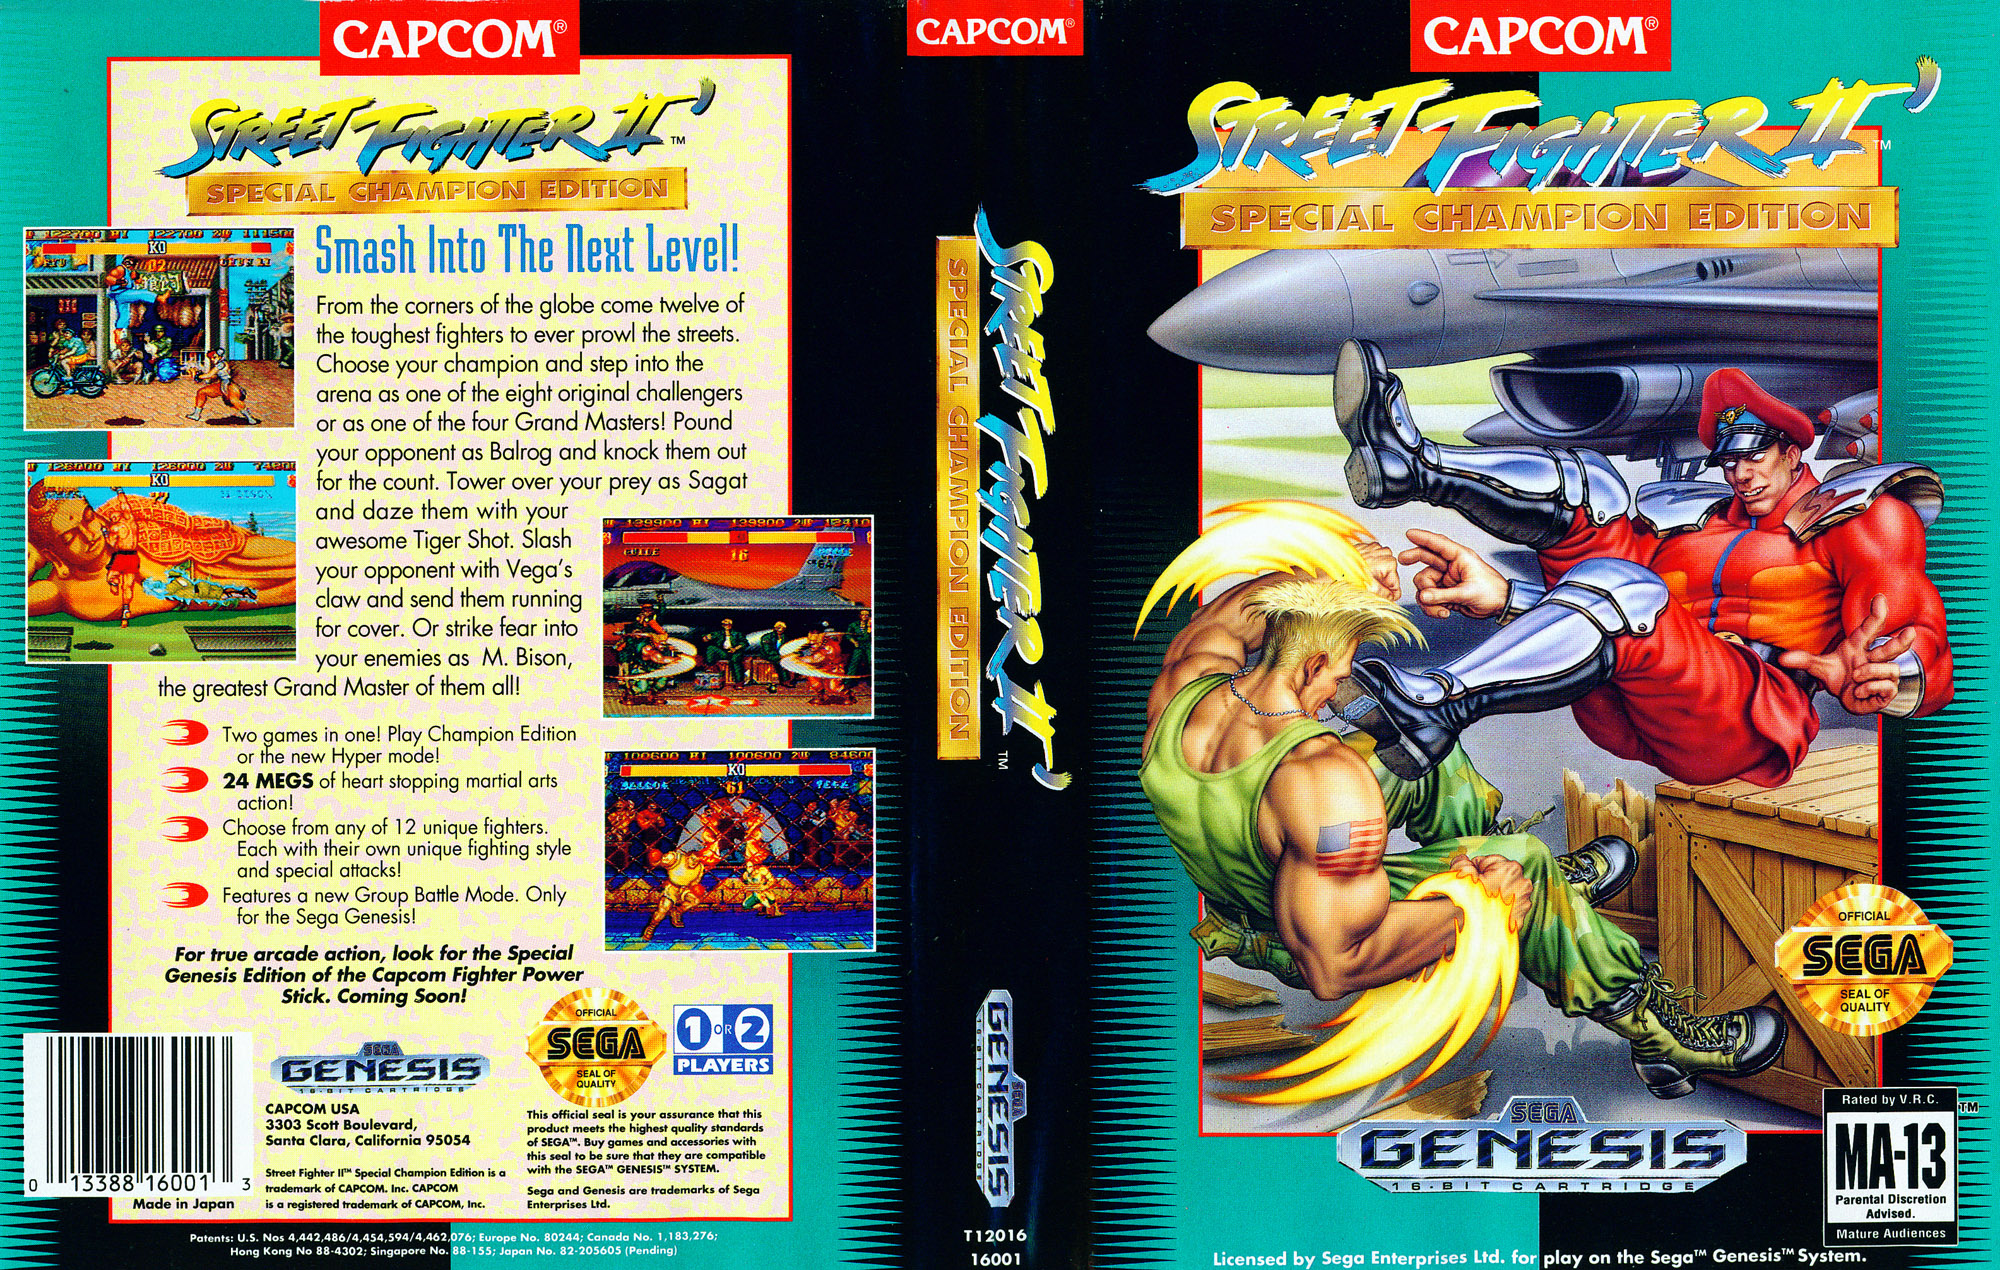 New Nintendo Switch Online Genesis Games Include Street Fighter II